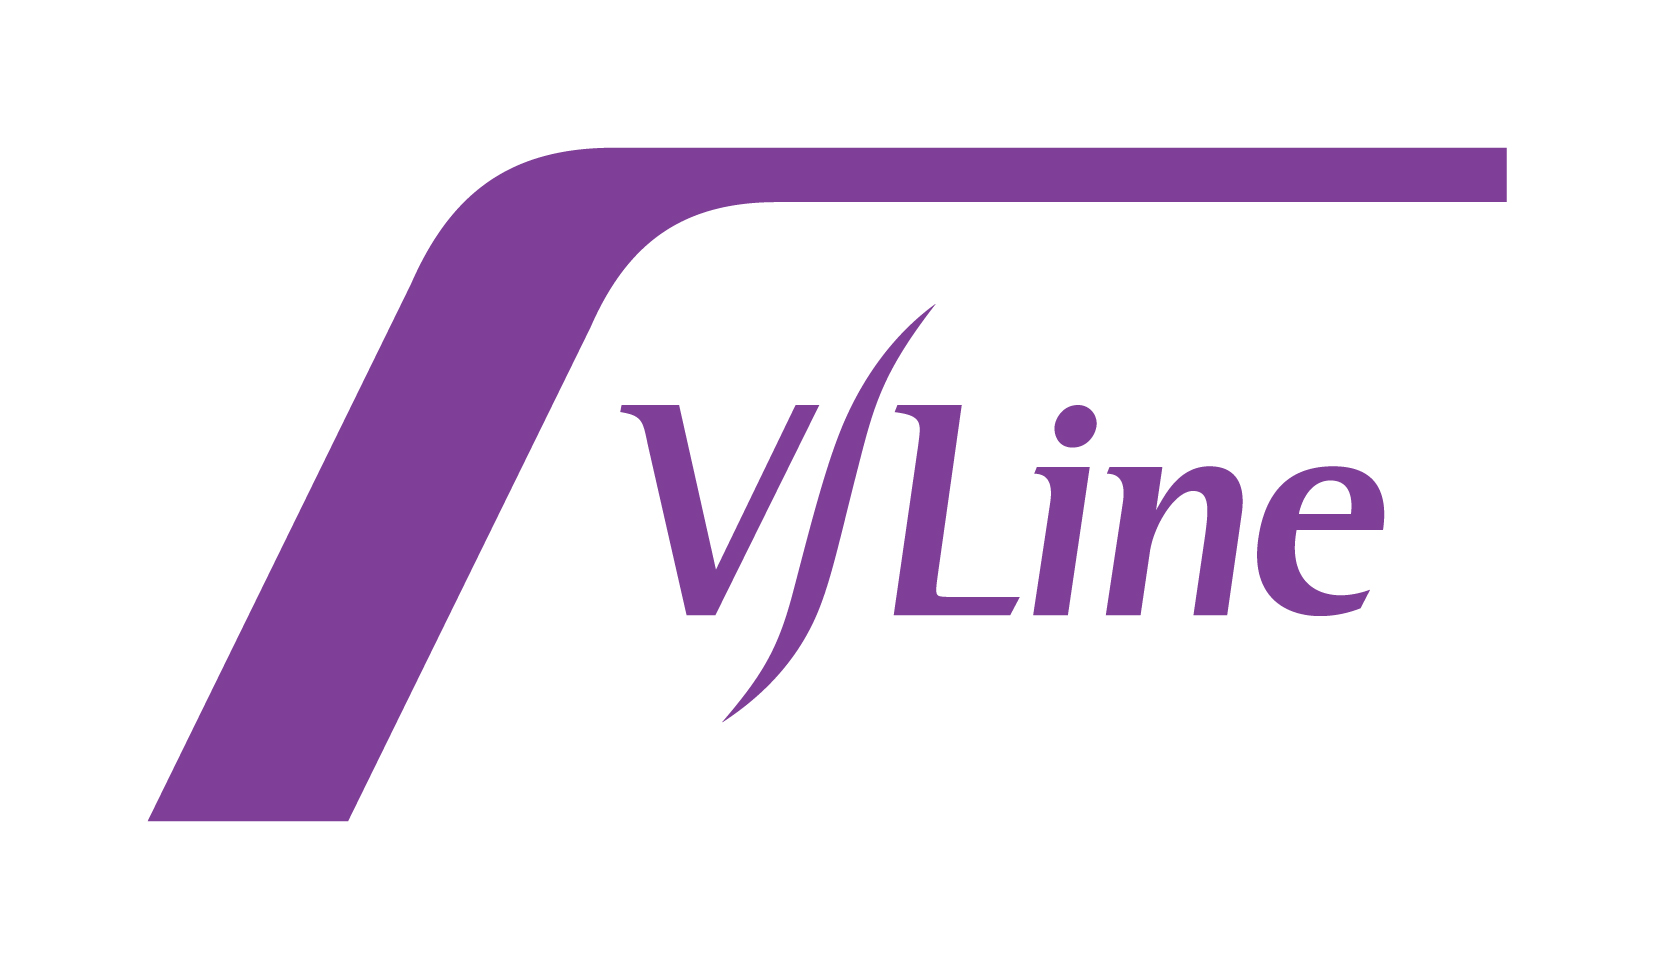 Линия 5 группа. Line лого. Логотип v. Логотип линии. Ист лайн логотип.